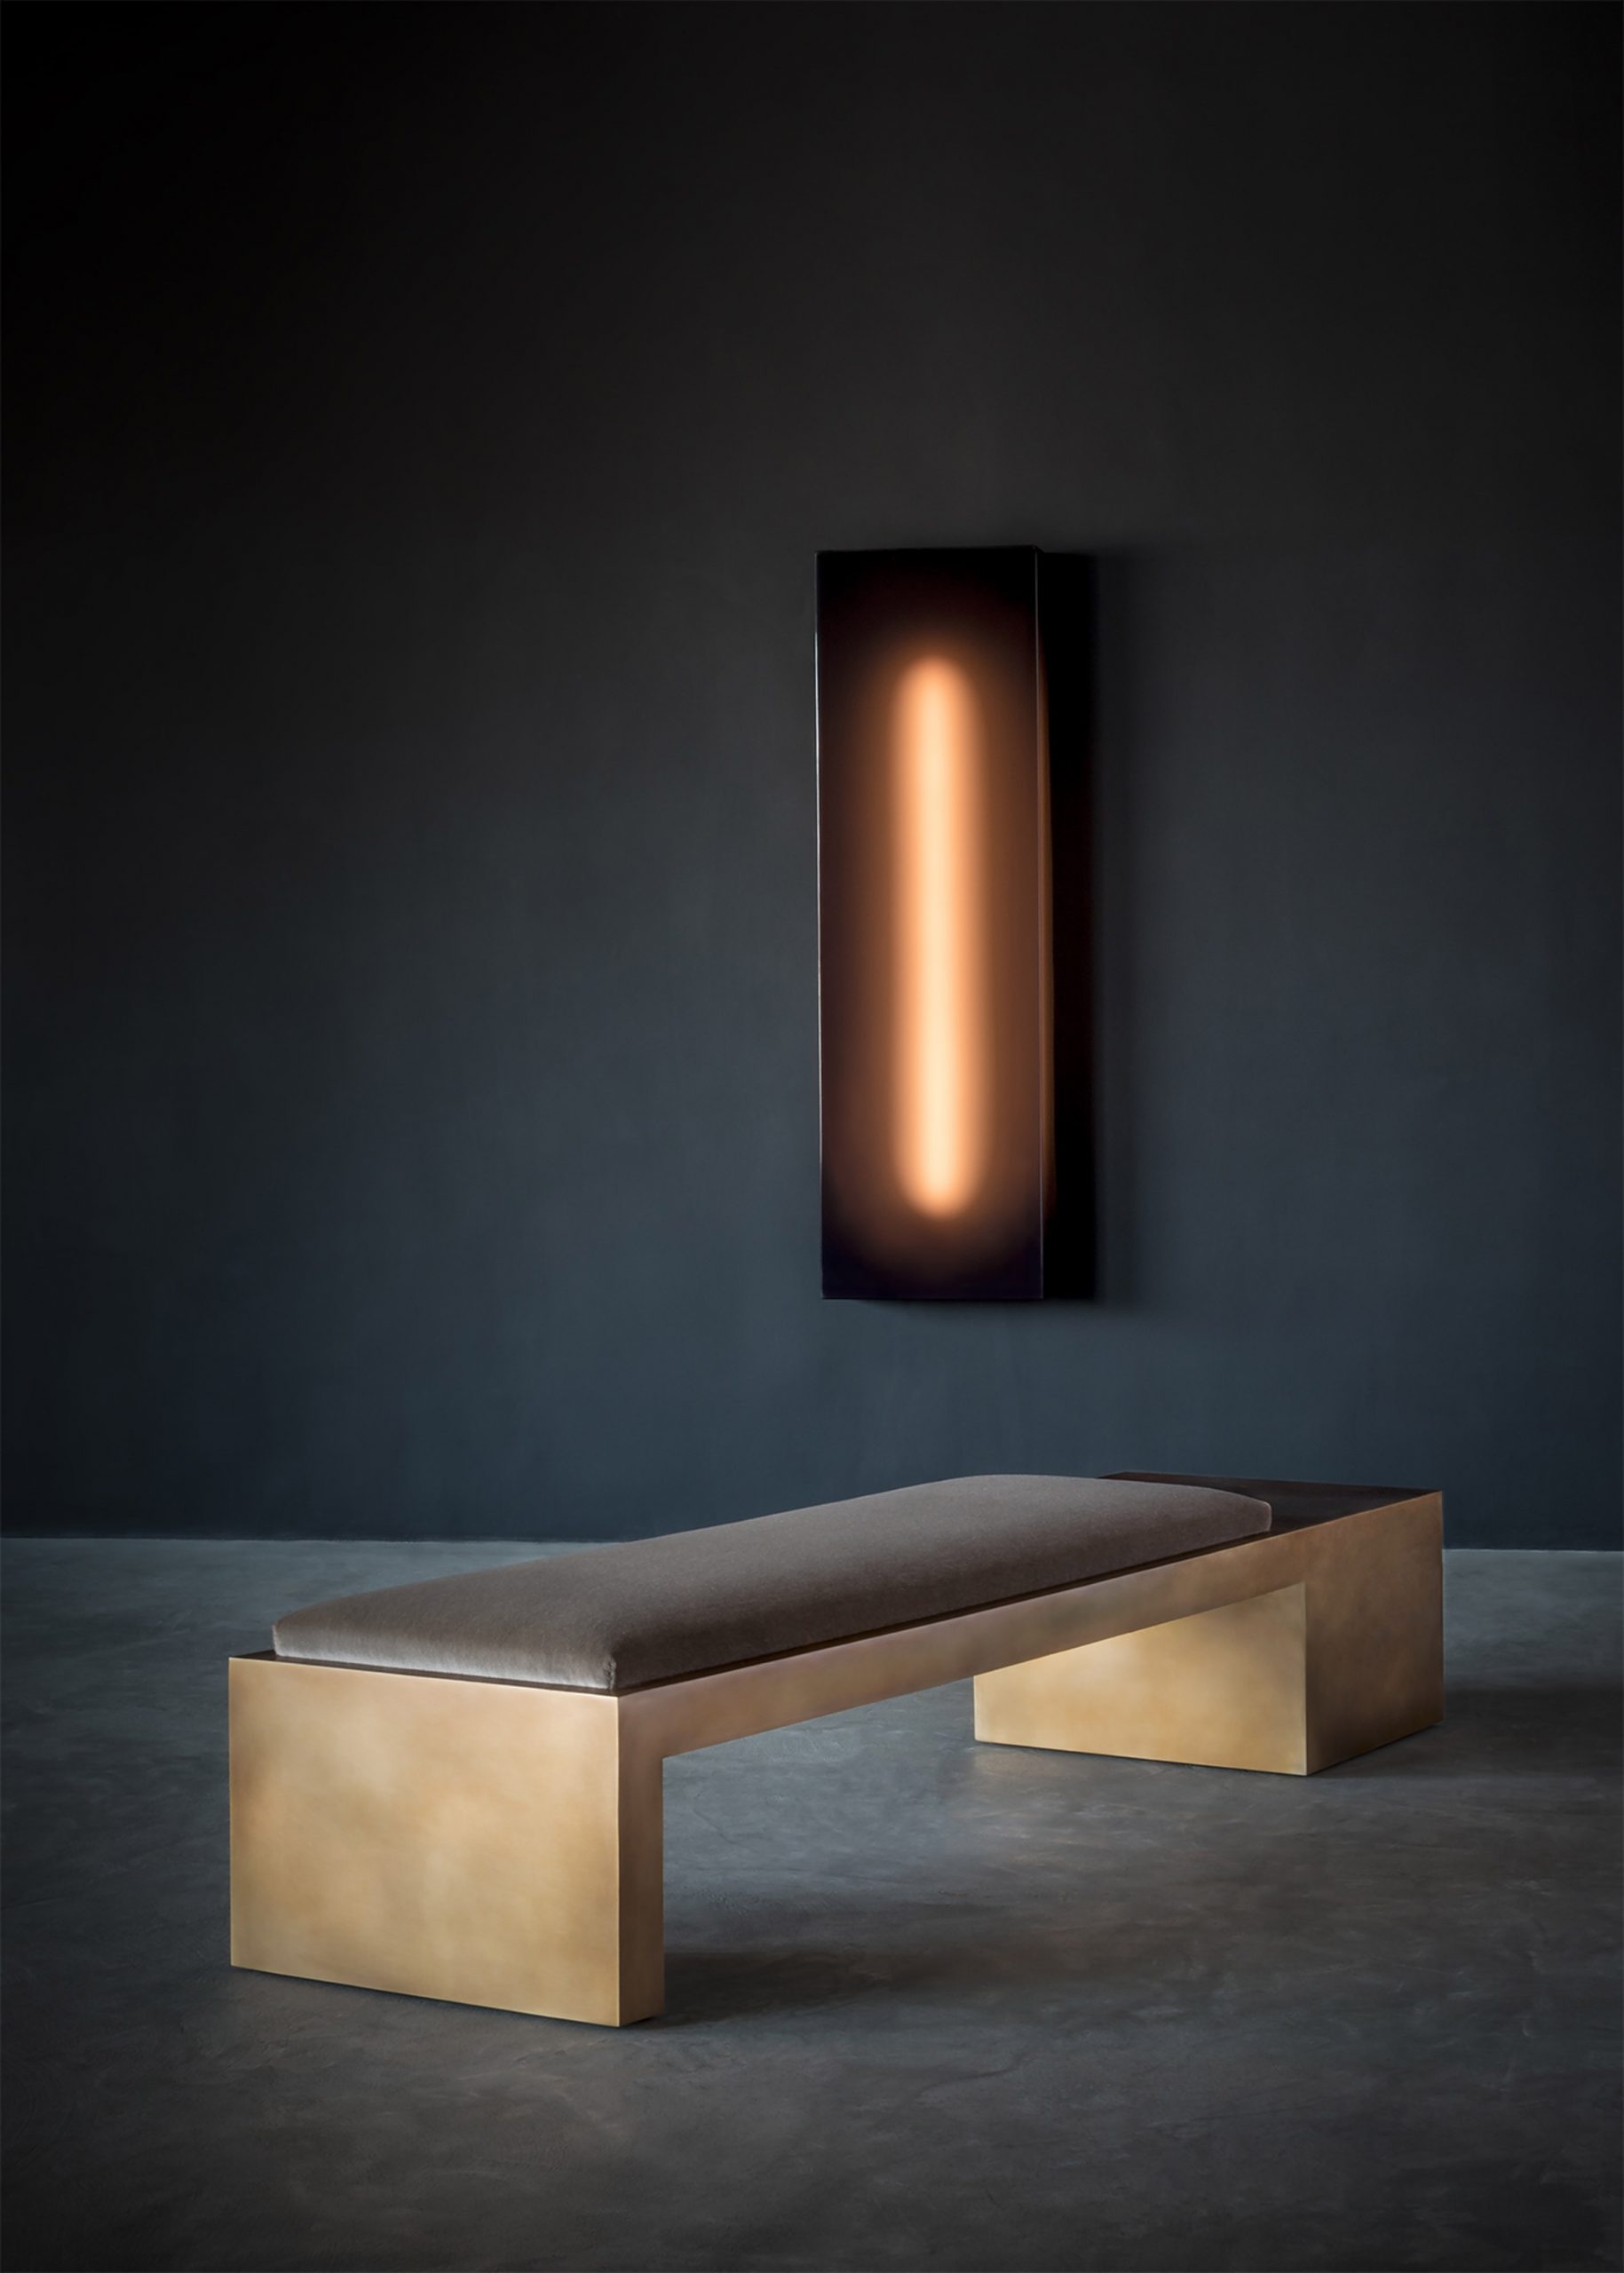 Offset Cube bench by Videre Licet via Twentieth gallery